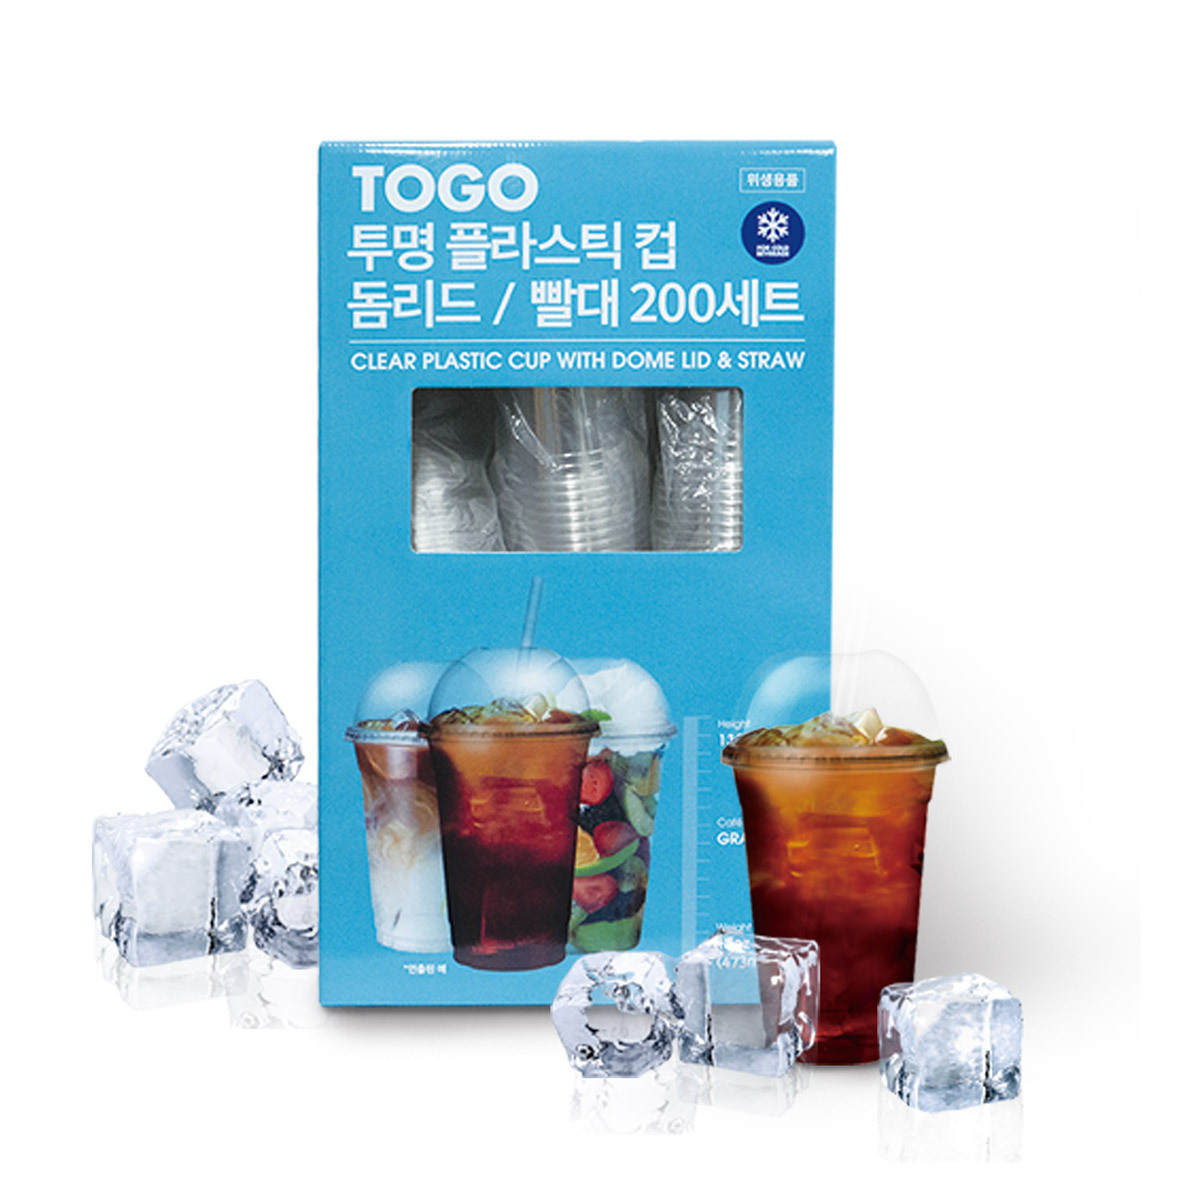 TOGO 투명 플라스틱 컵 돔리드/빨대 473ml x 200